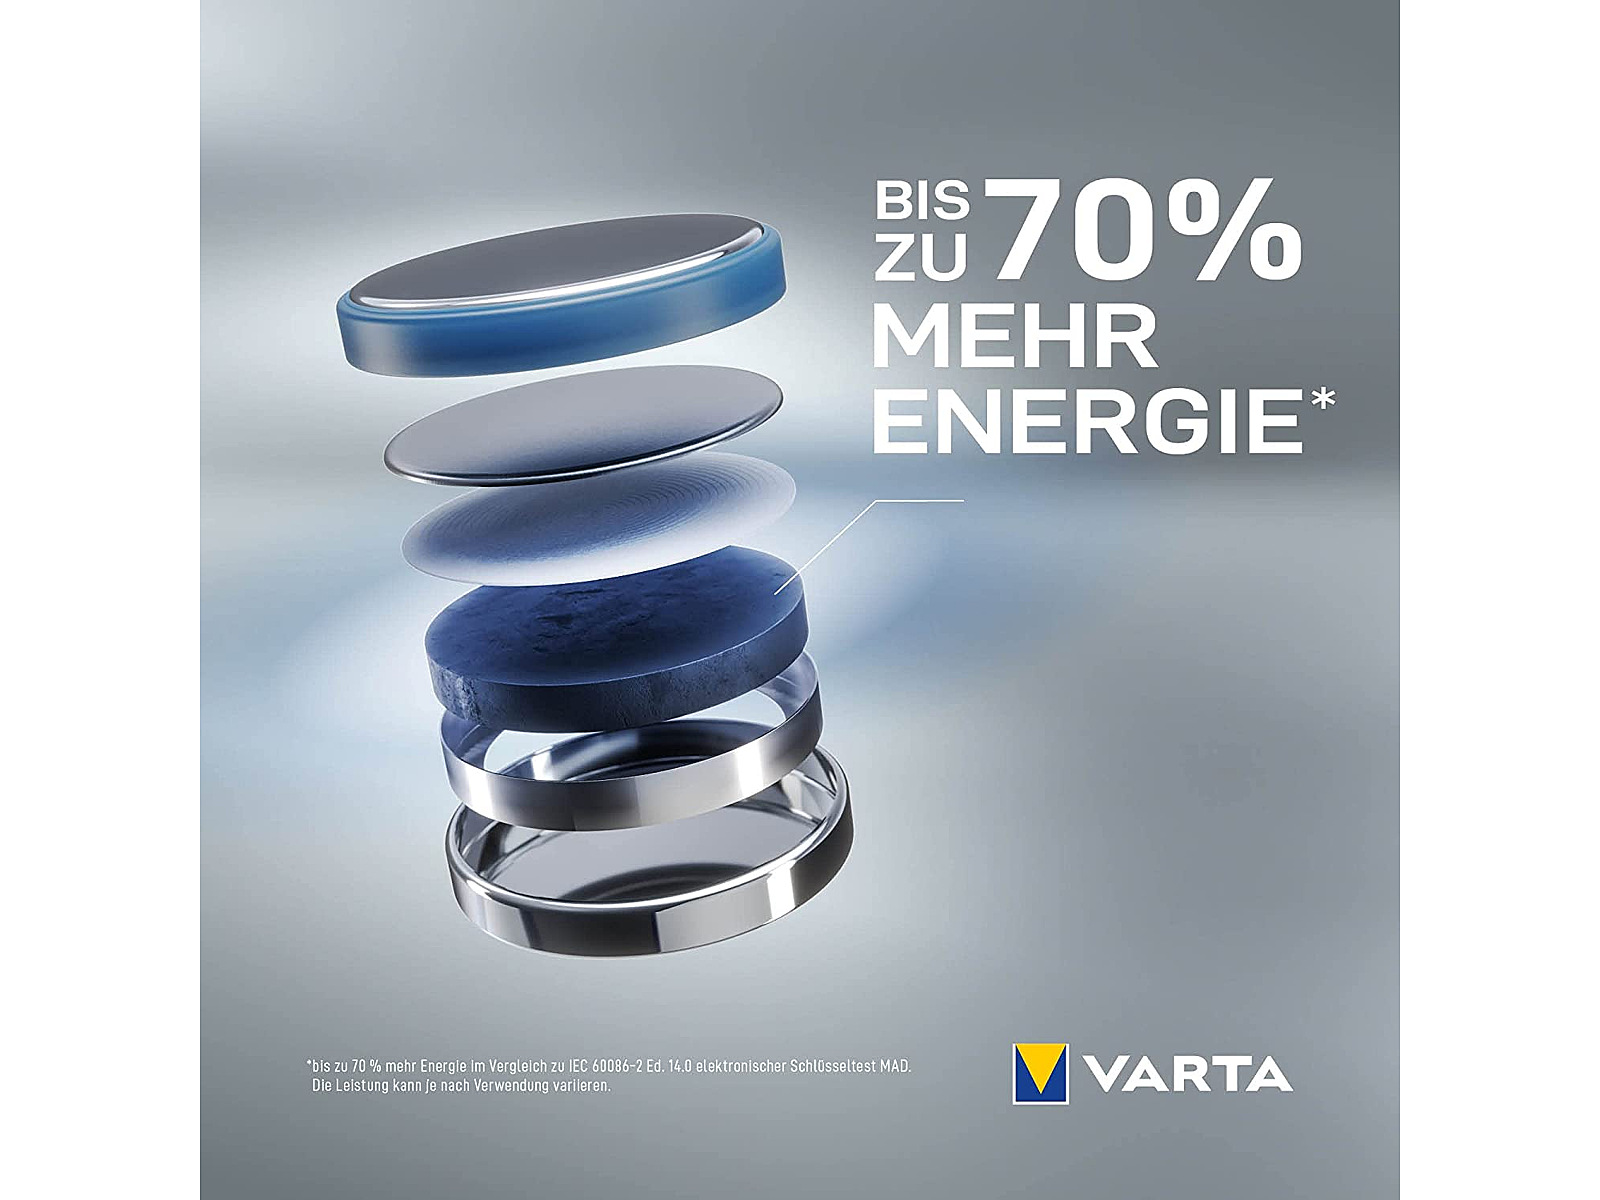 VARTA CR2032 Professional Electronics Button Cell